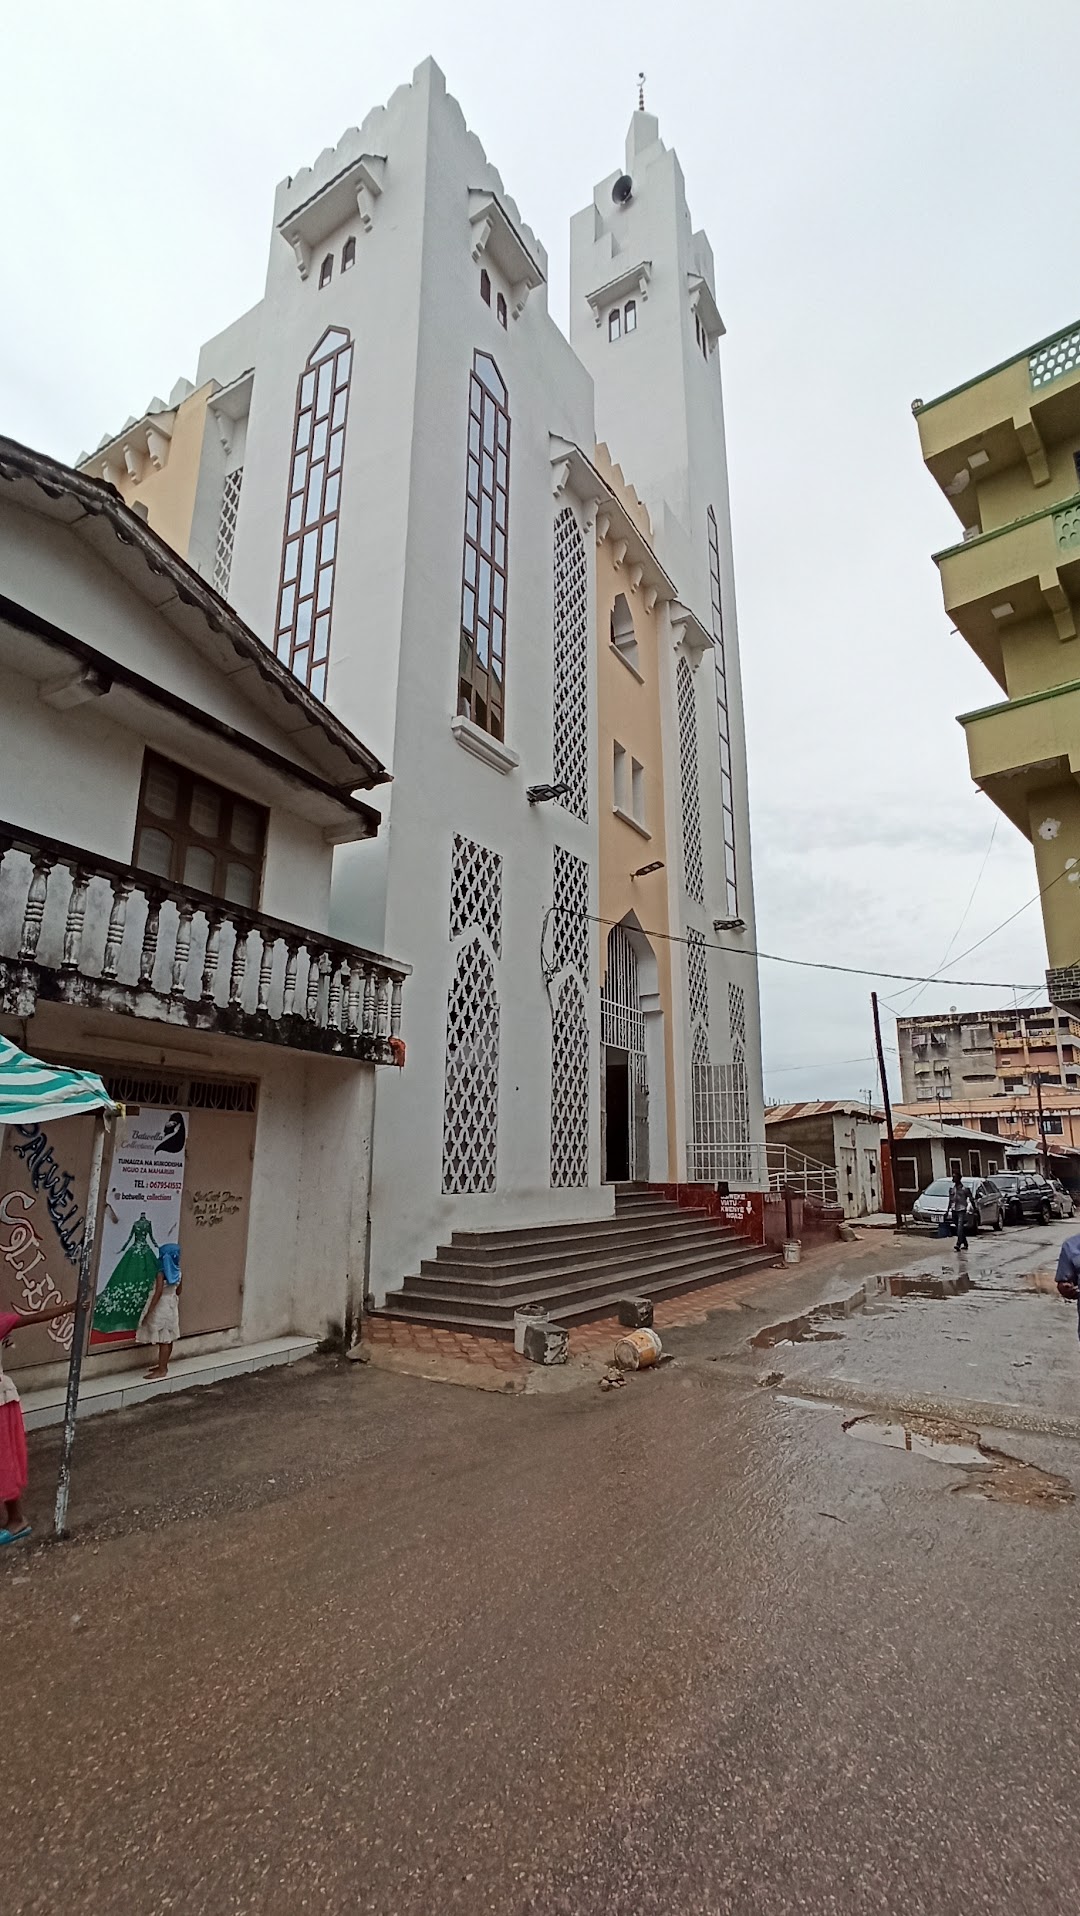 Mwembe Tanga Mosque